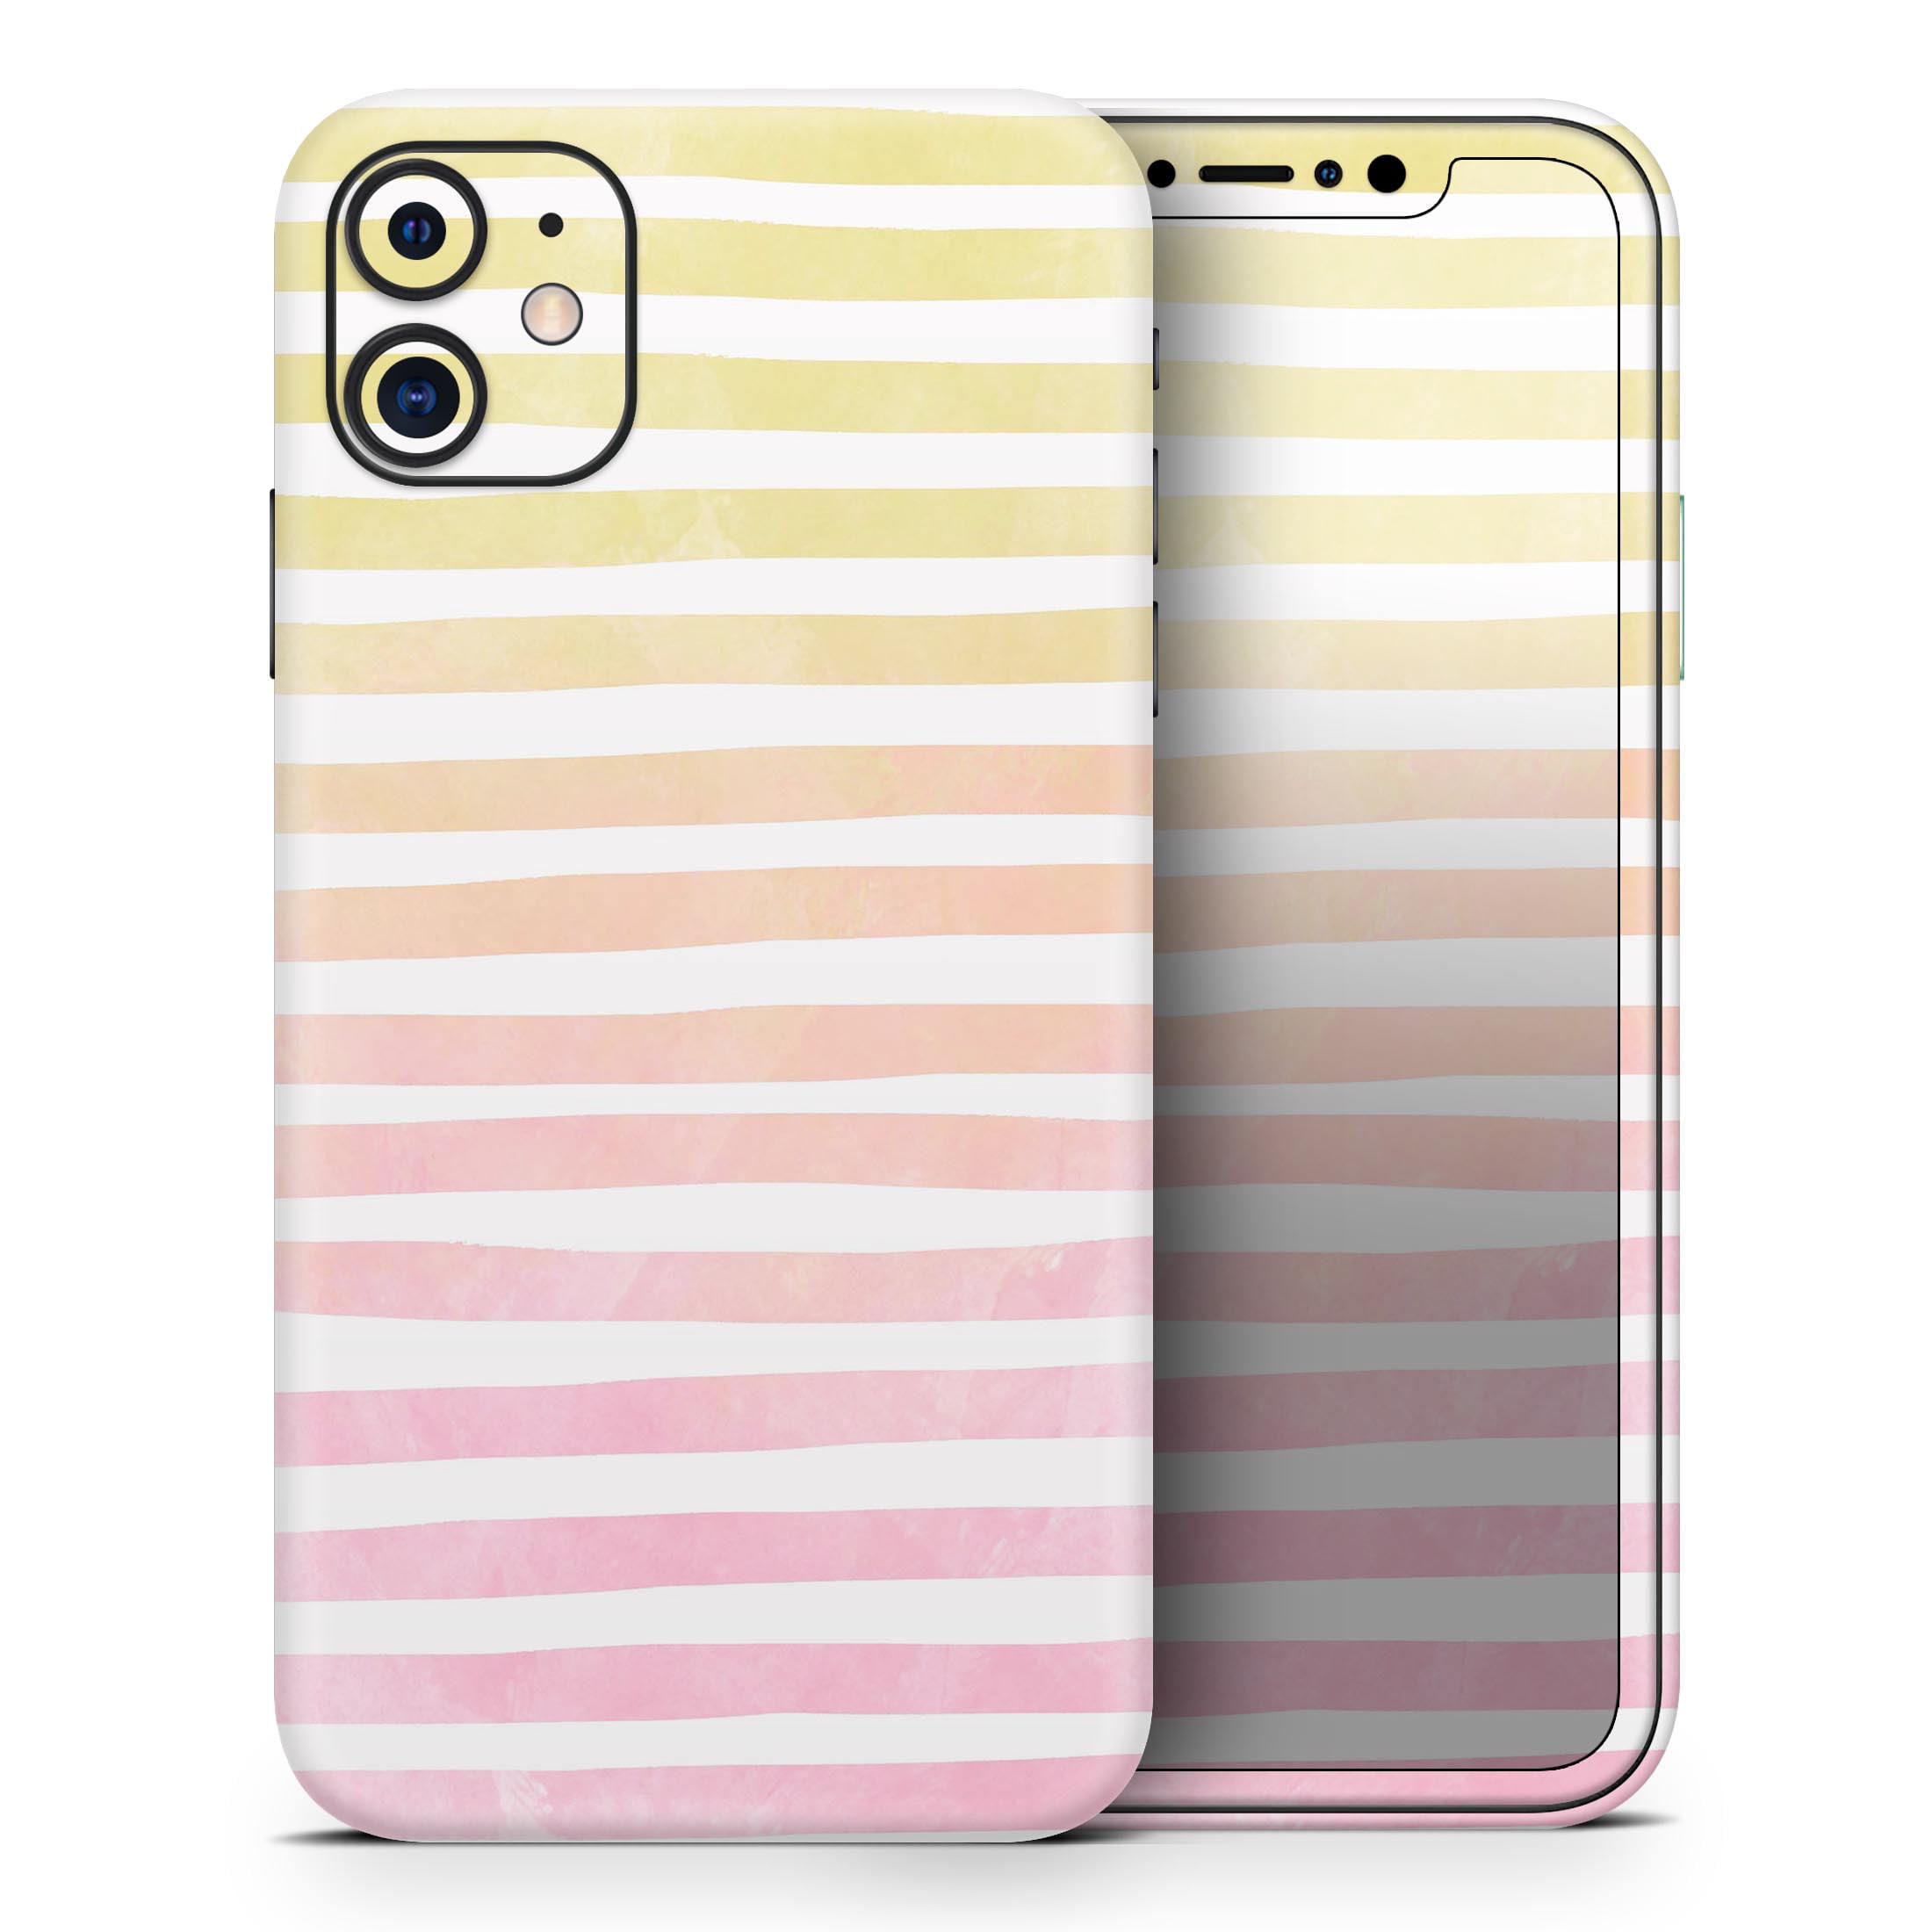 Tropical Stripes iPhone 6 Plus case